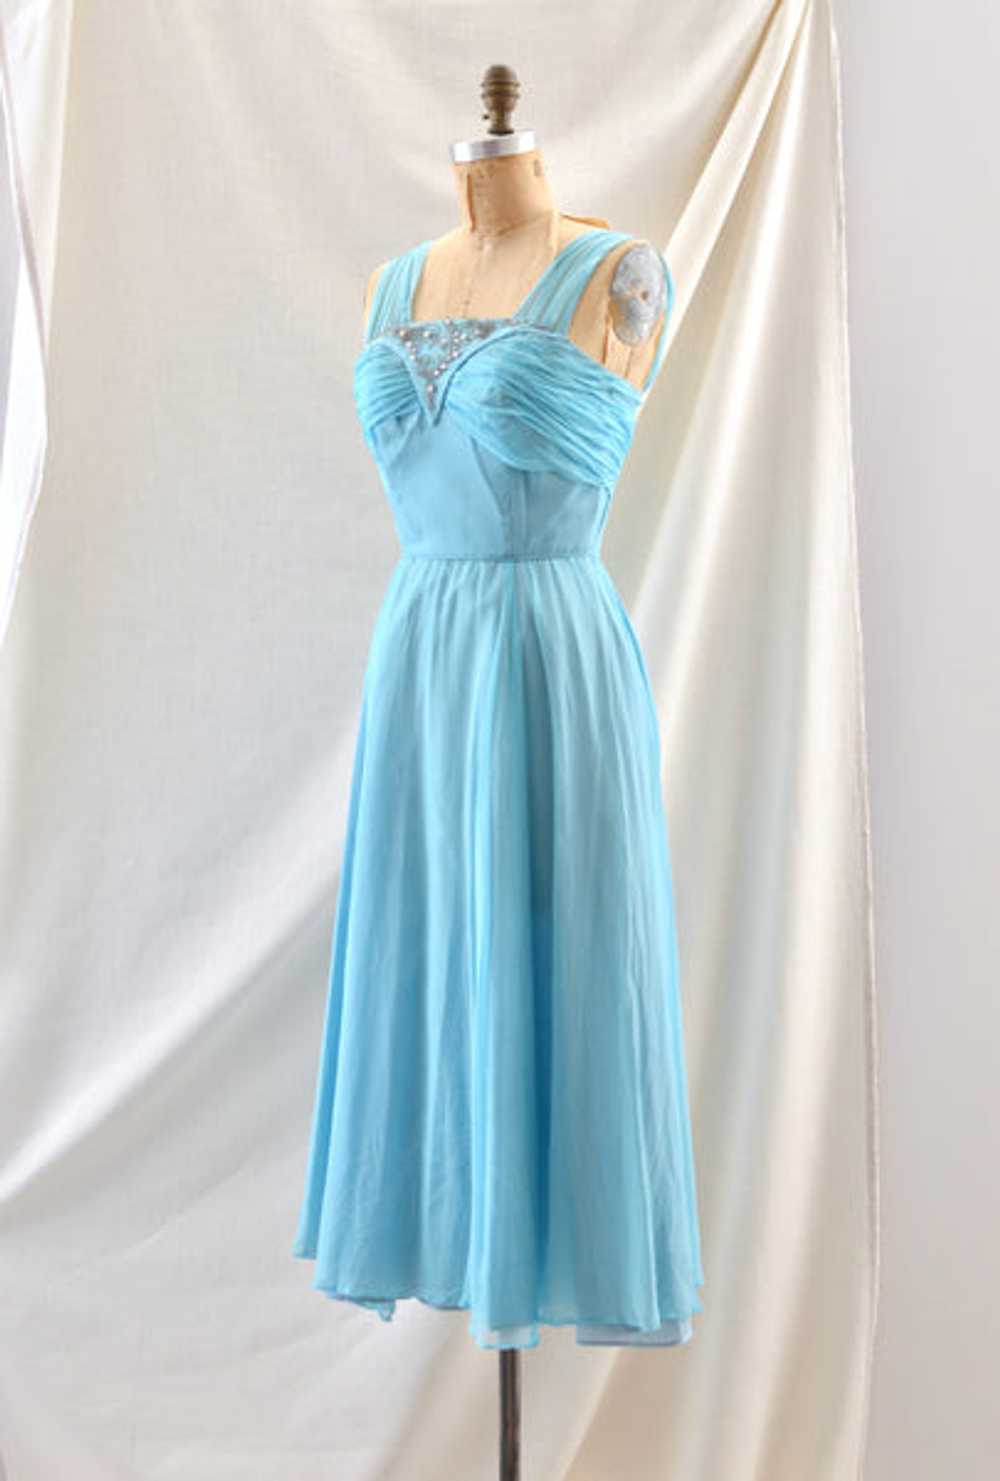 1950's Emma Domb Blue Dress - image 7